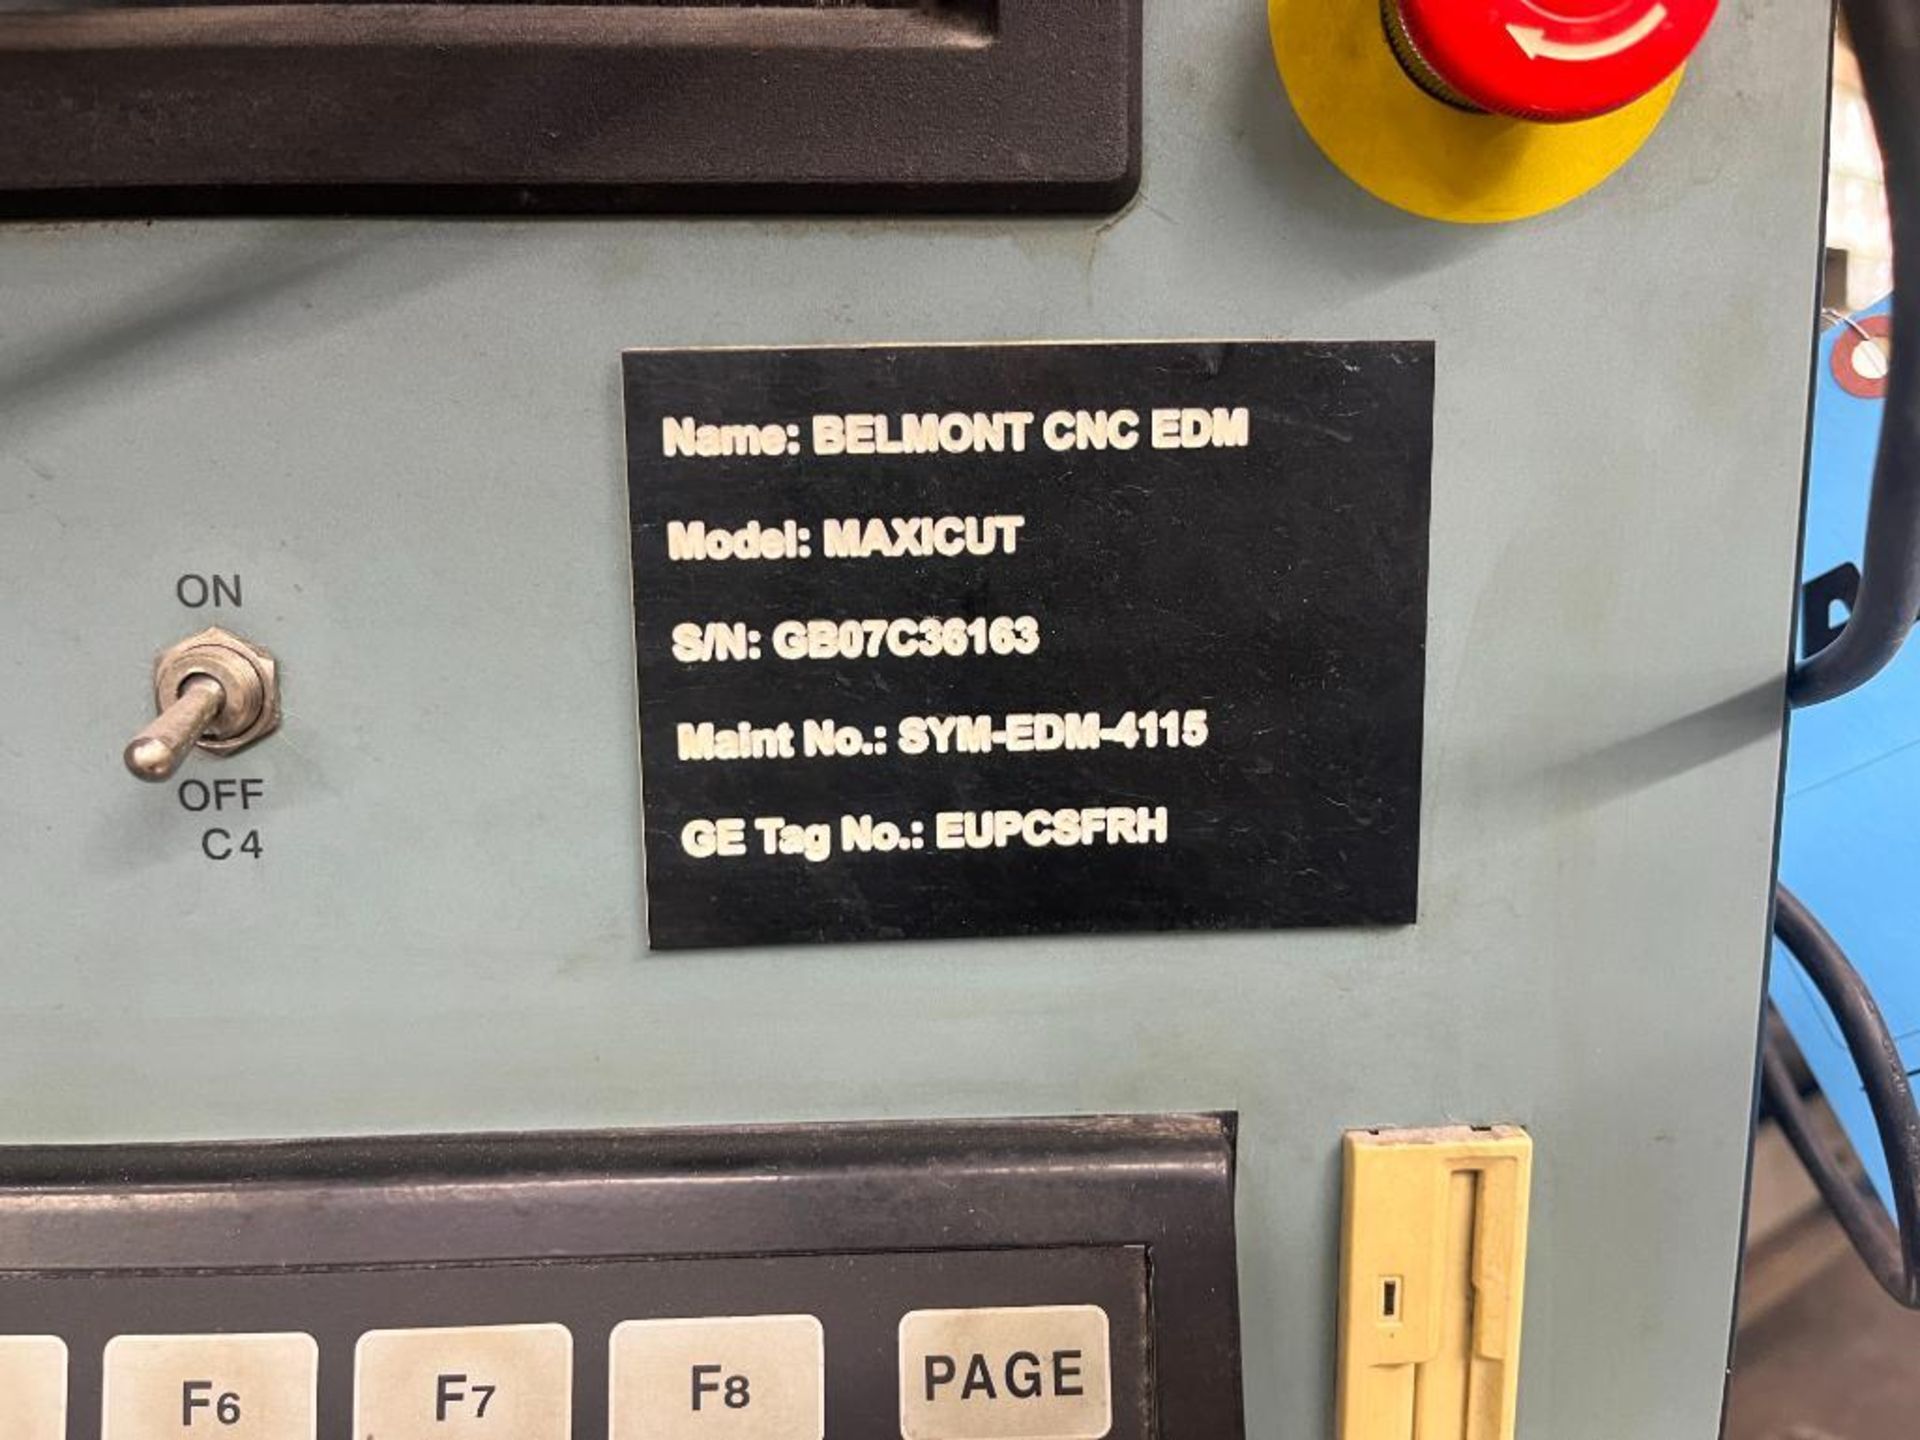 Belmont CNC Hole Popper EDM Machine Model Maxicut, S/N GB07C36163 with Belmont CNC Control. 24" x 42 - Image 7 of 45